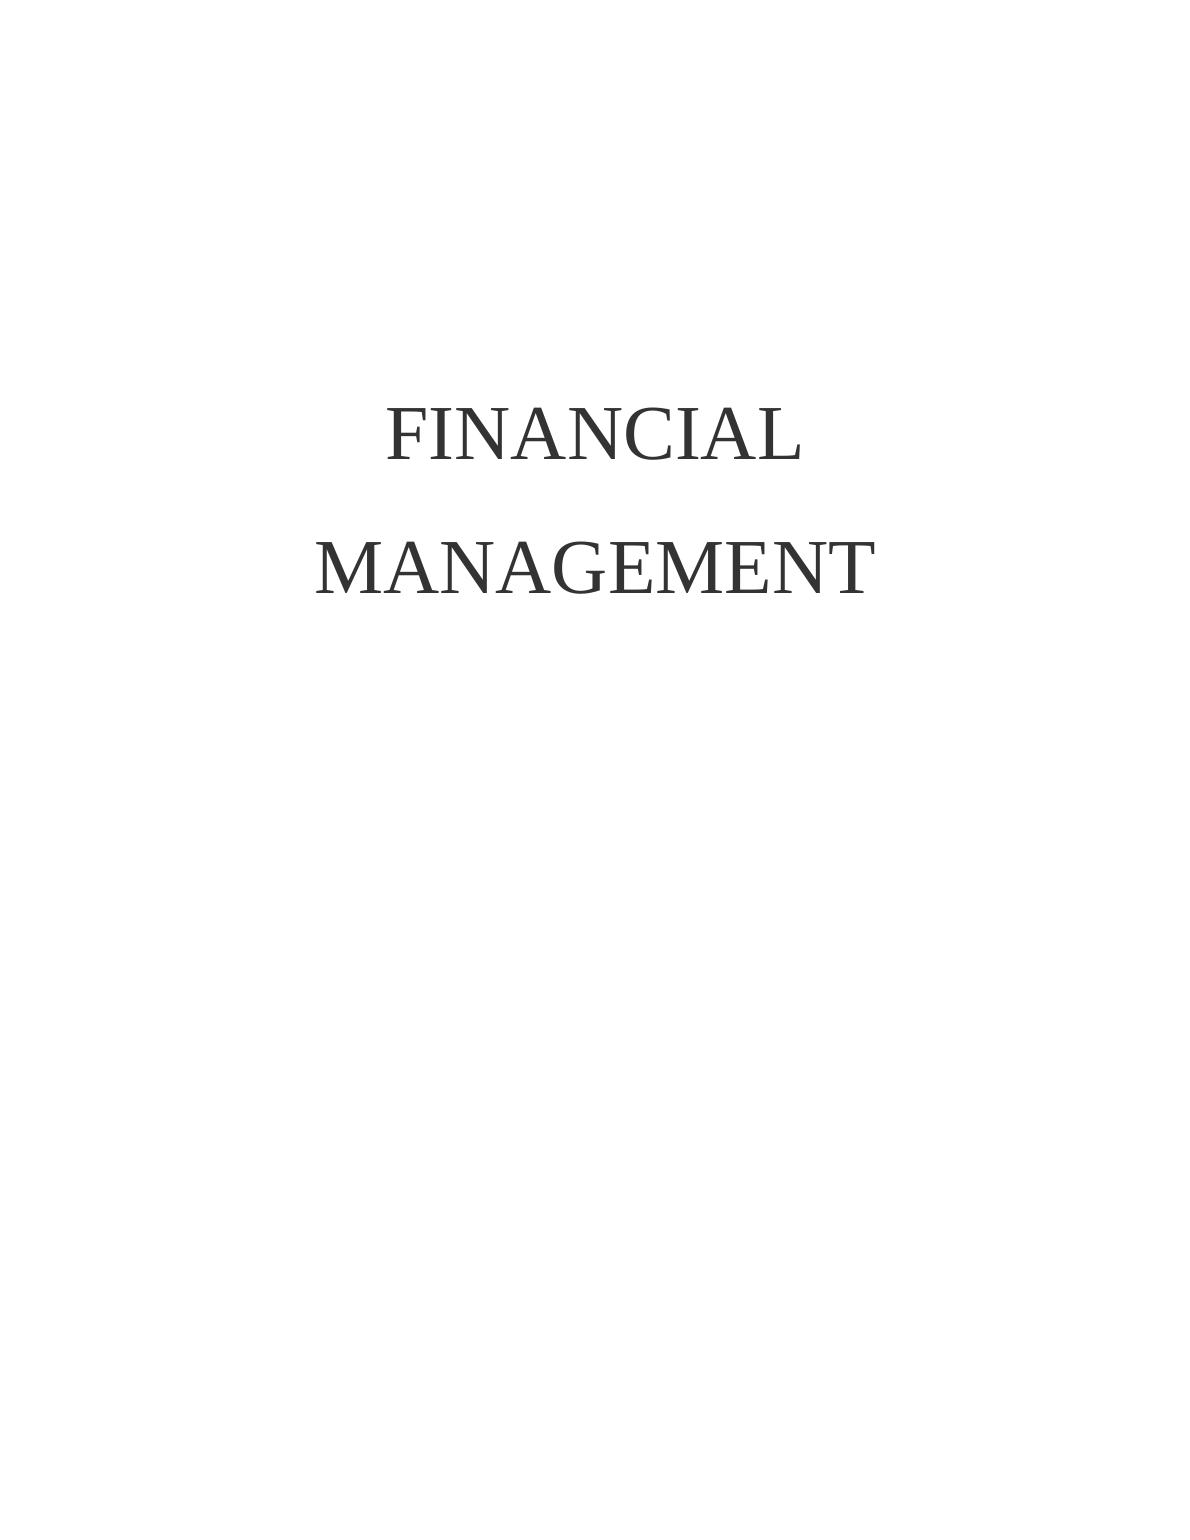 Financial  Management  -  Assignment Sample_1